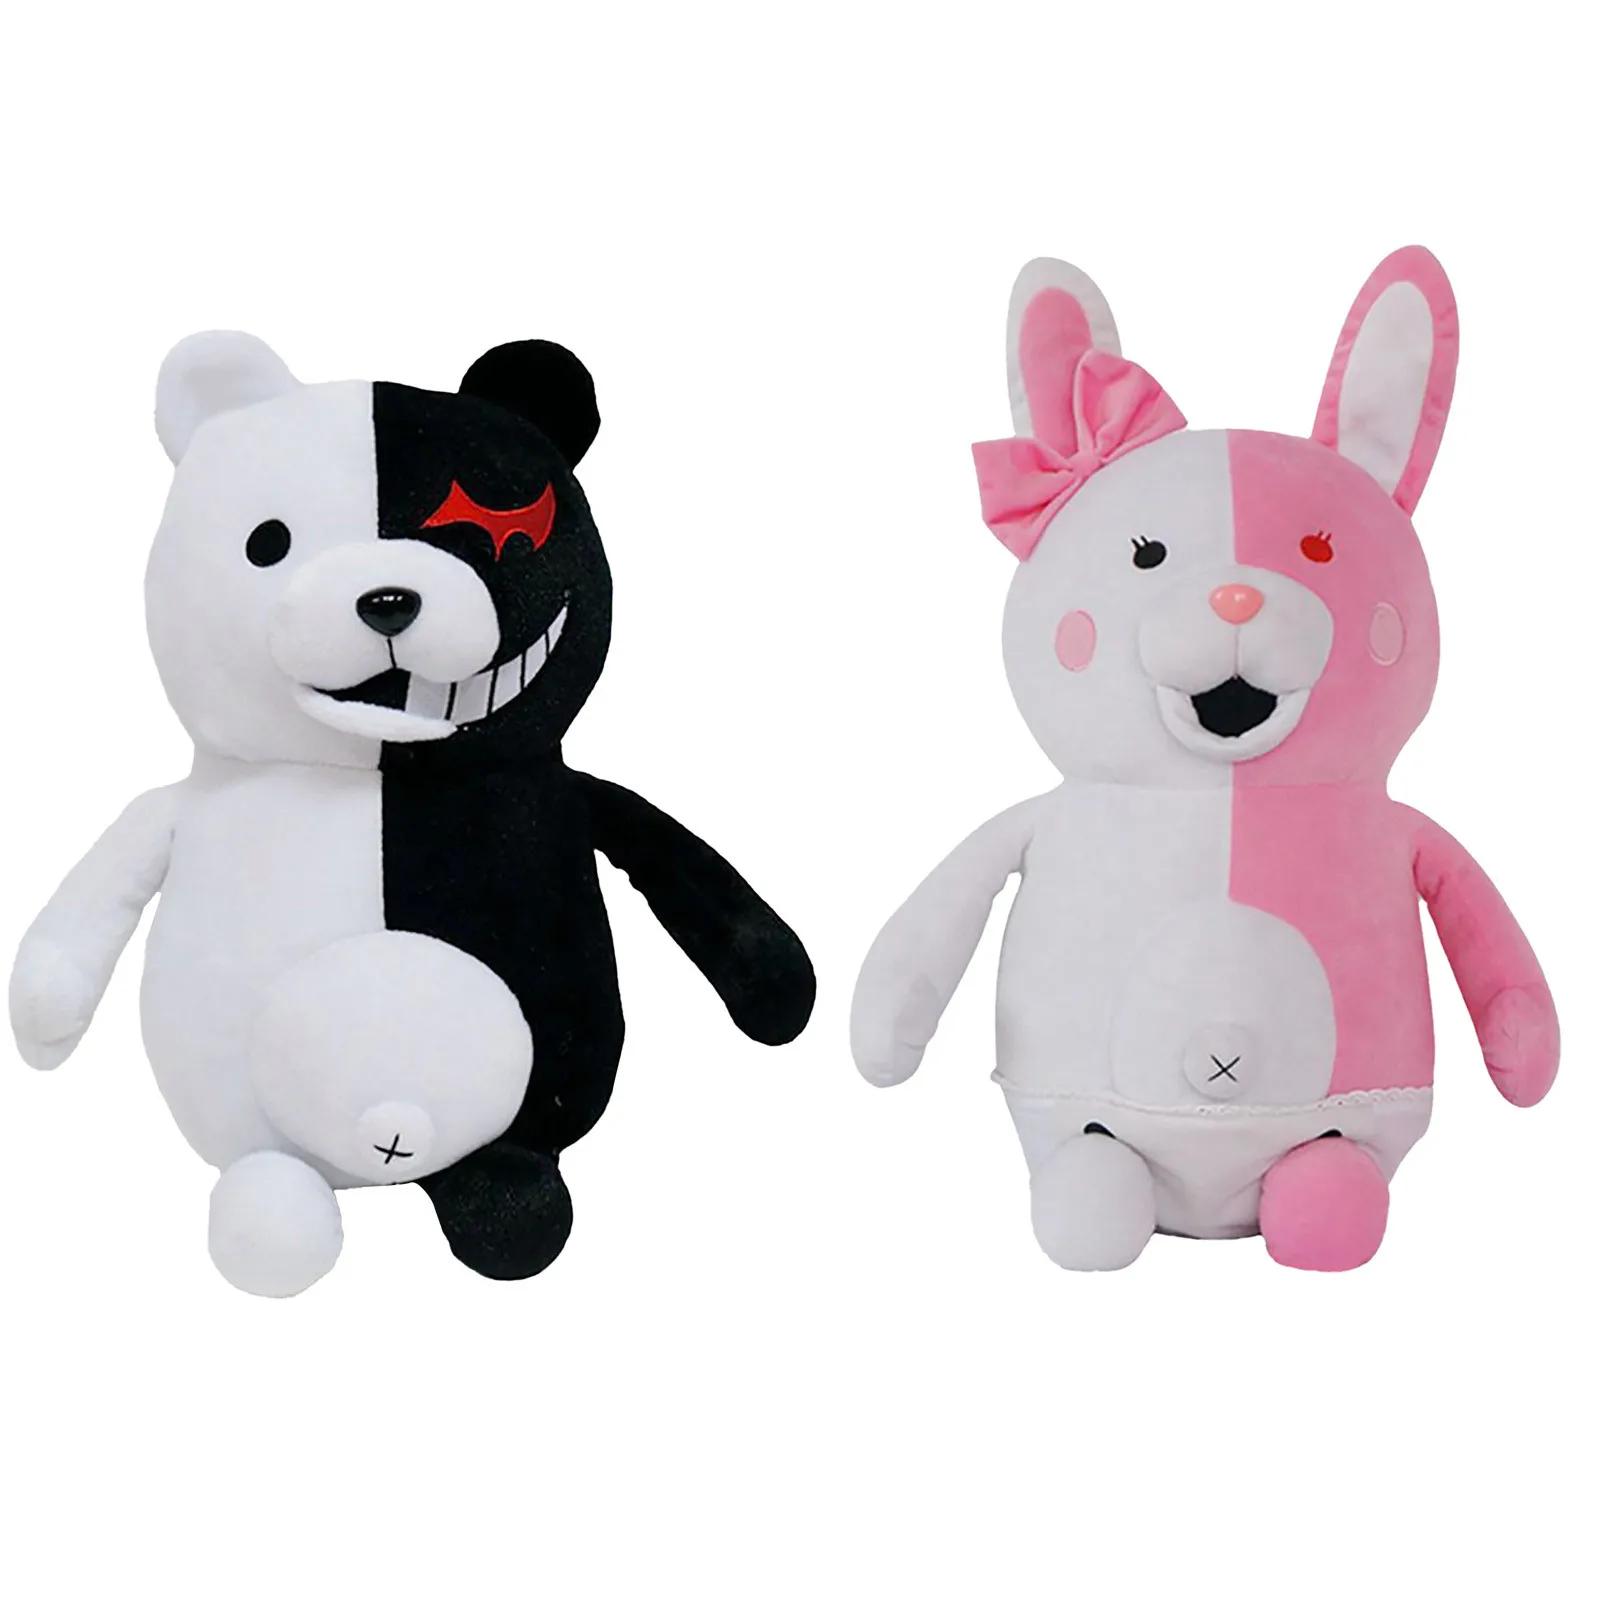 25cm/9.8" Danganronpa Monokuma Black&White Bear Dangan Ronpa Soft Plush Toy Doll 